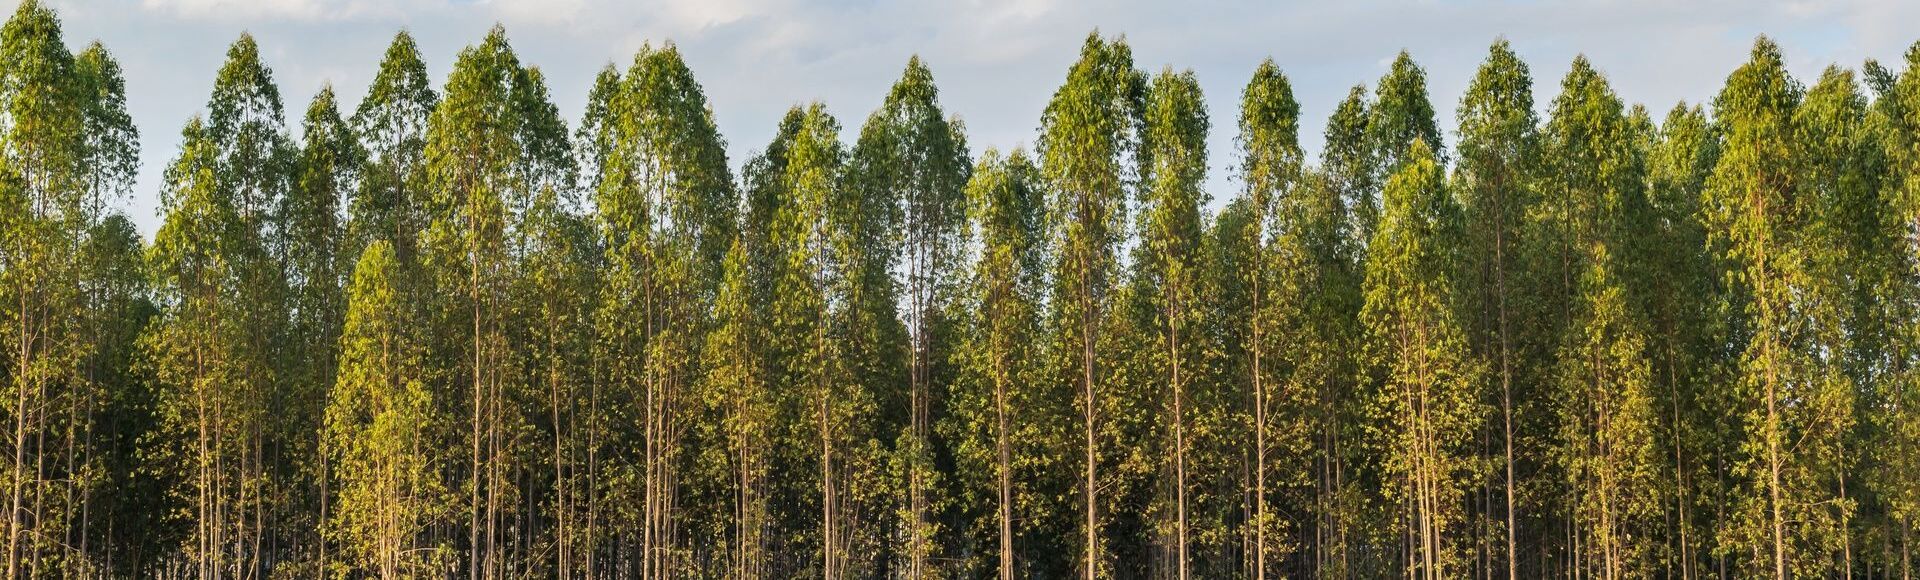 Como plantar eucalipto no pasto: 5 dicas para ter sucesso